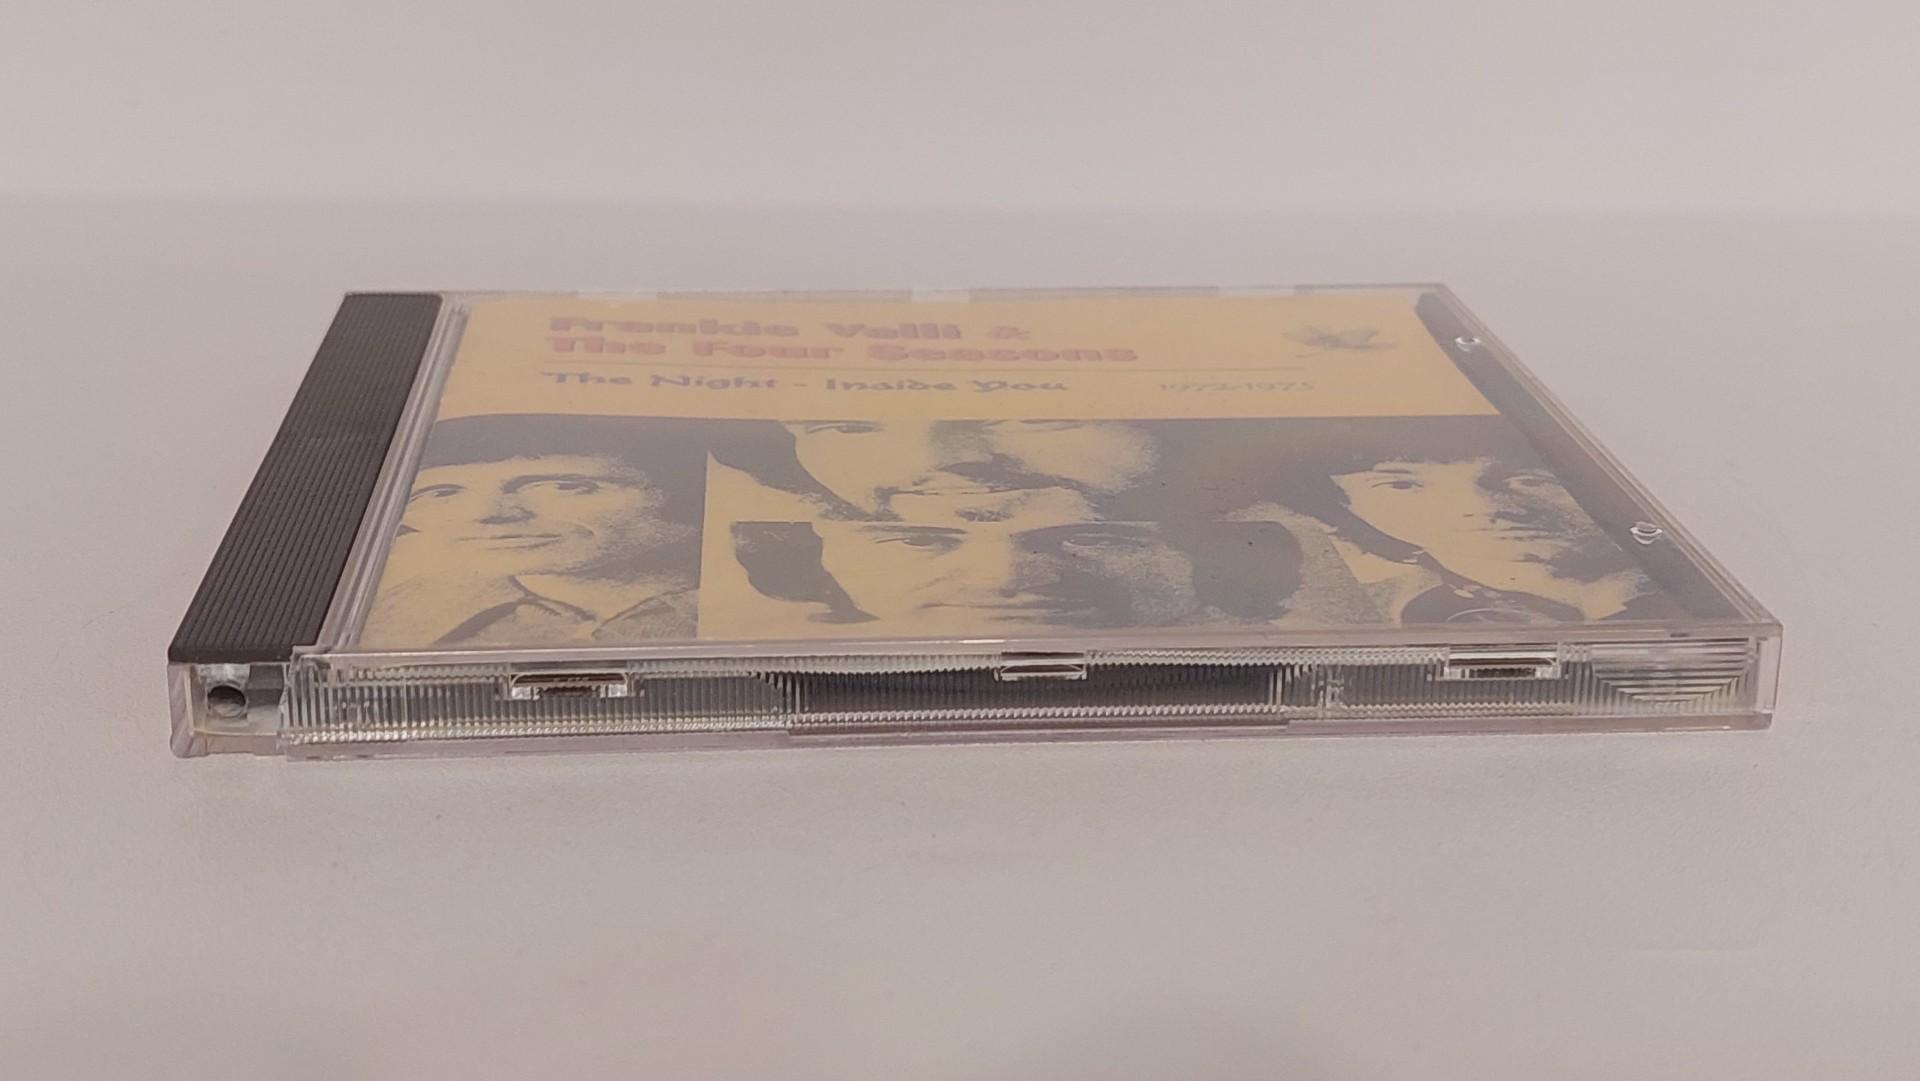 Audio CD Frankie Valli and The Four Seasons